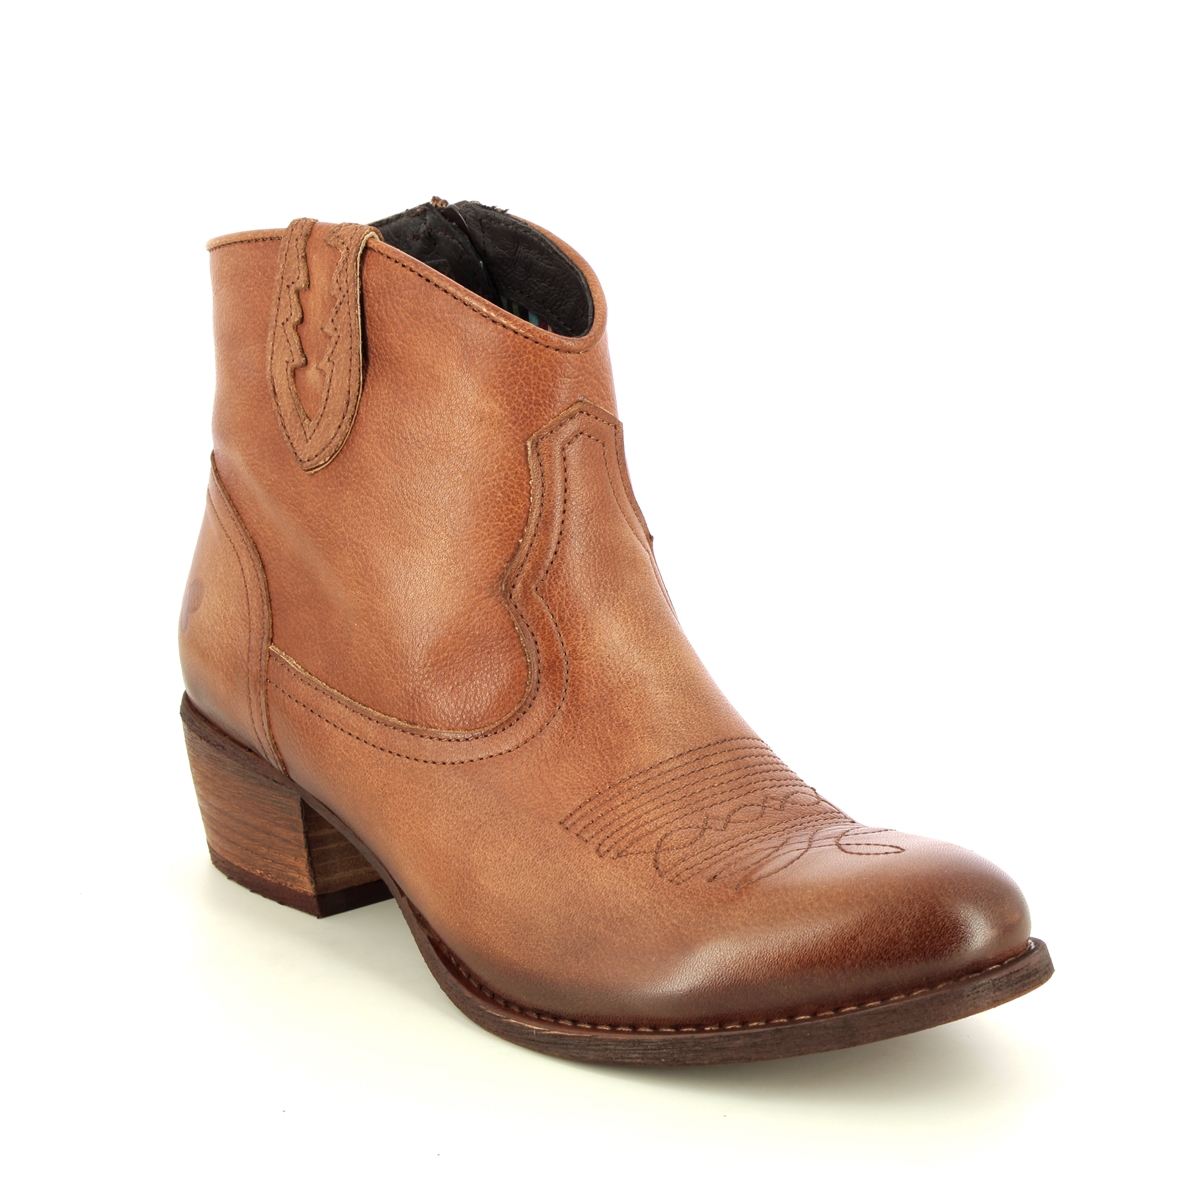 Felmini - Dresa  Cowboy (Tan Leather ) B504-11 In Size 39 In Plain Tan Leather